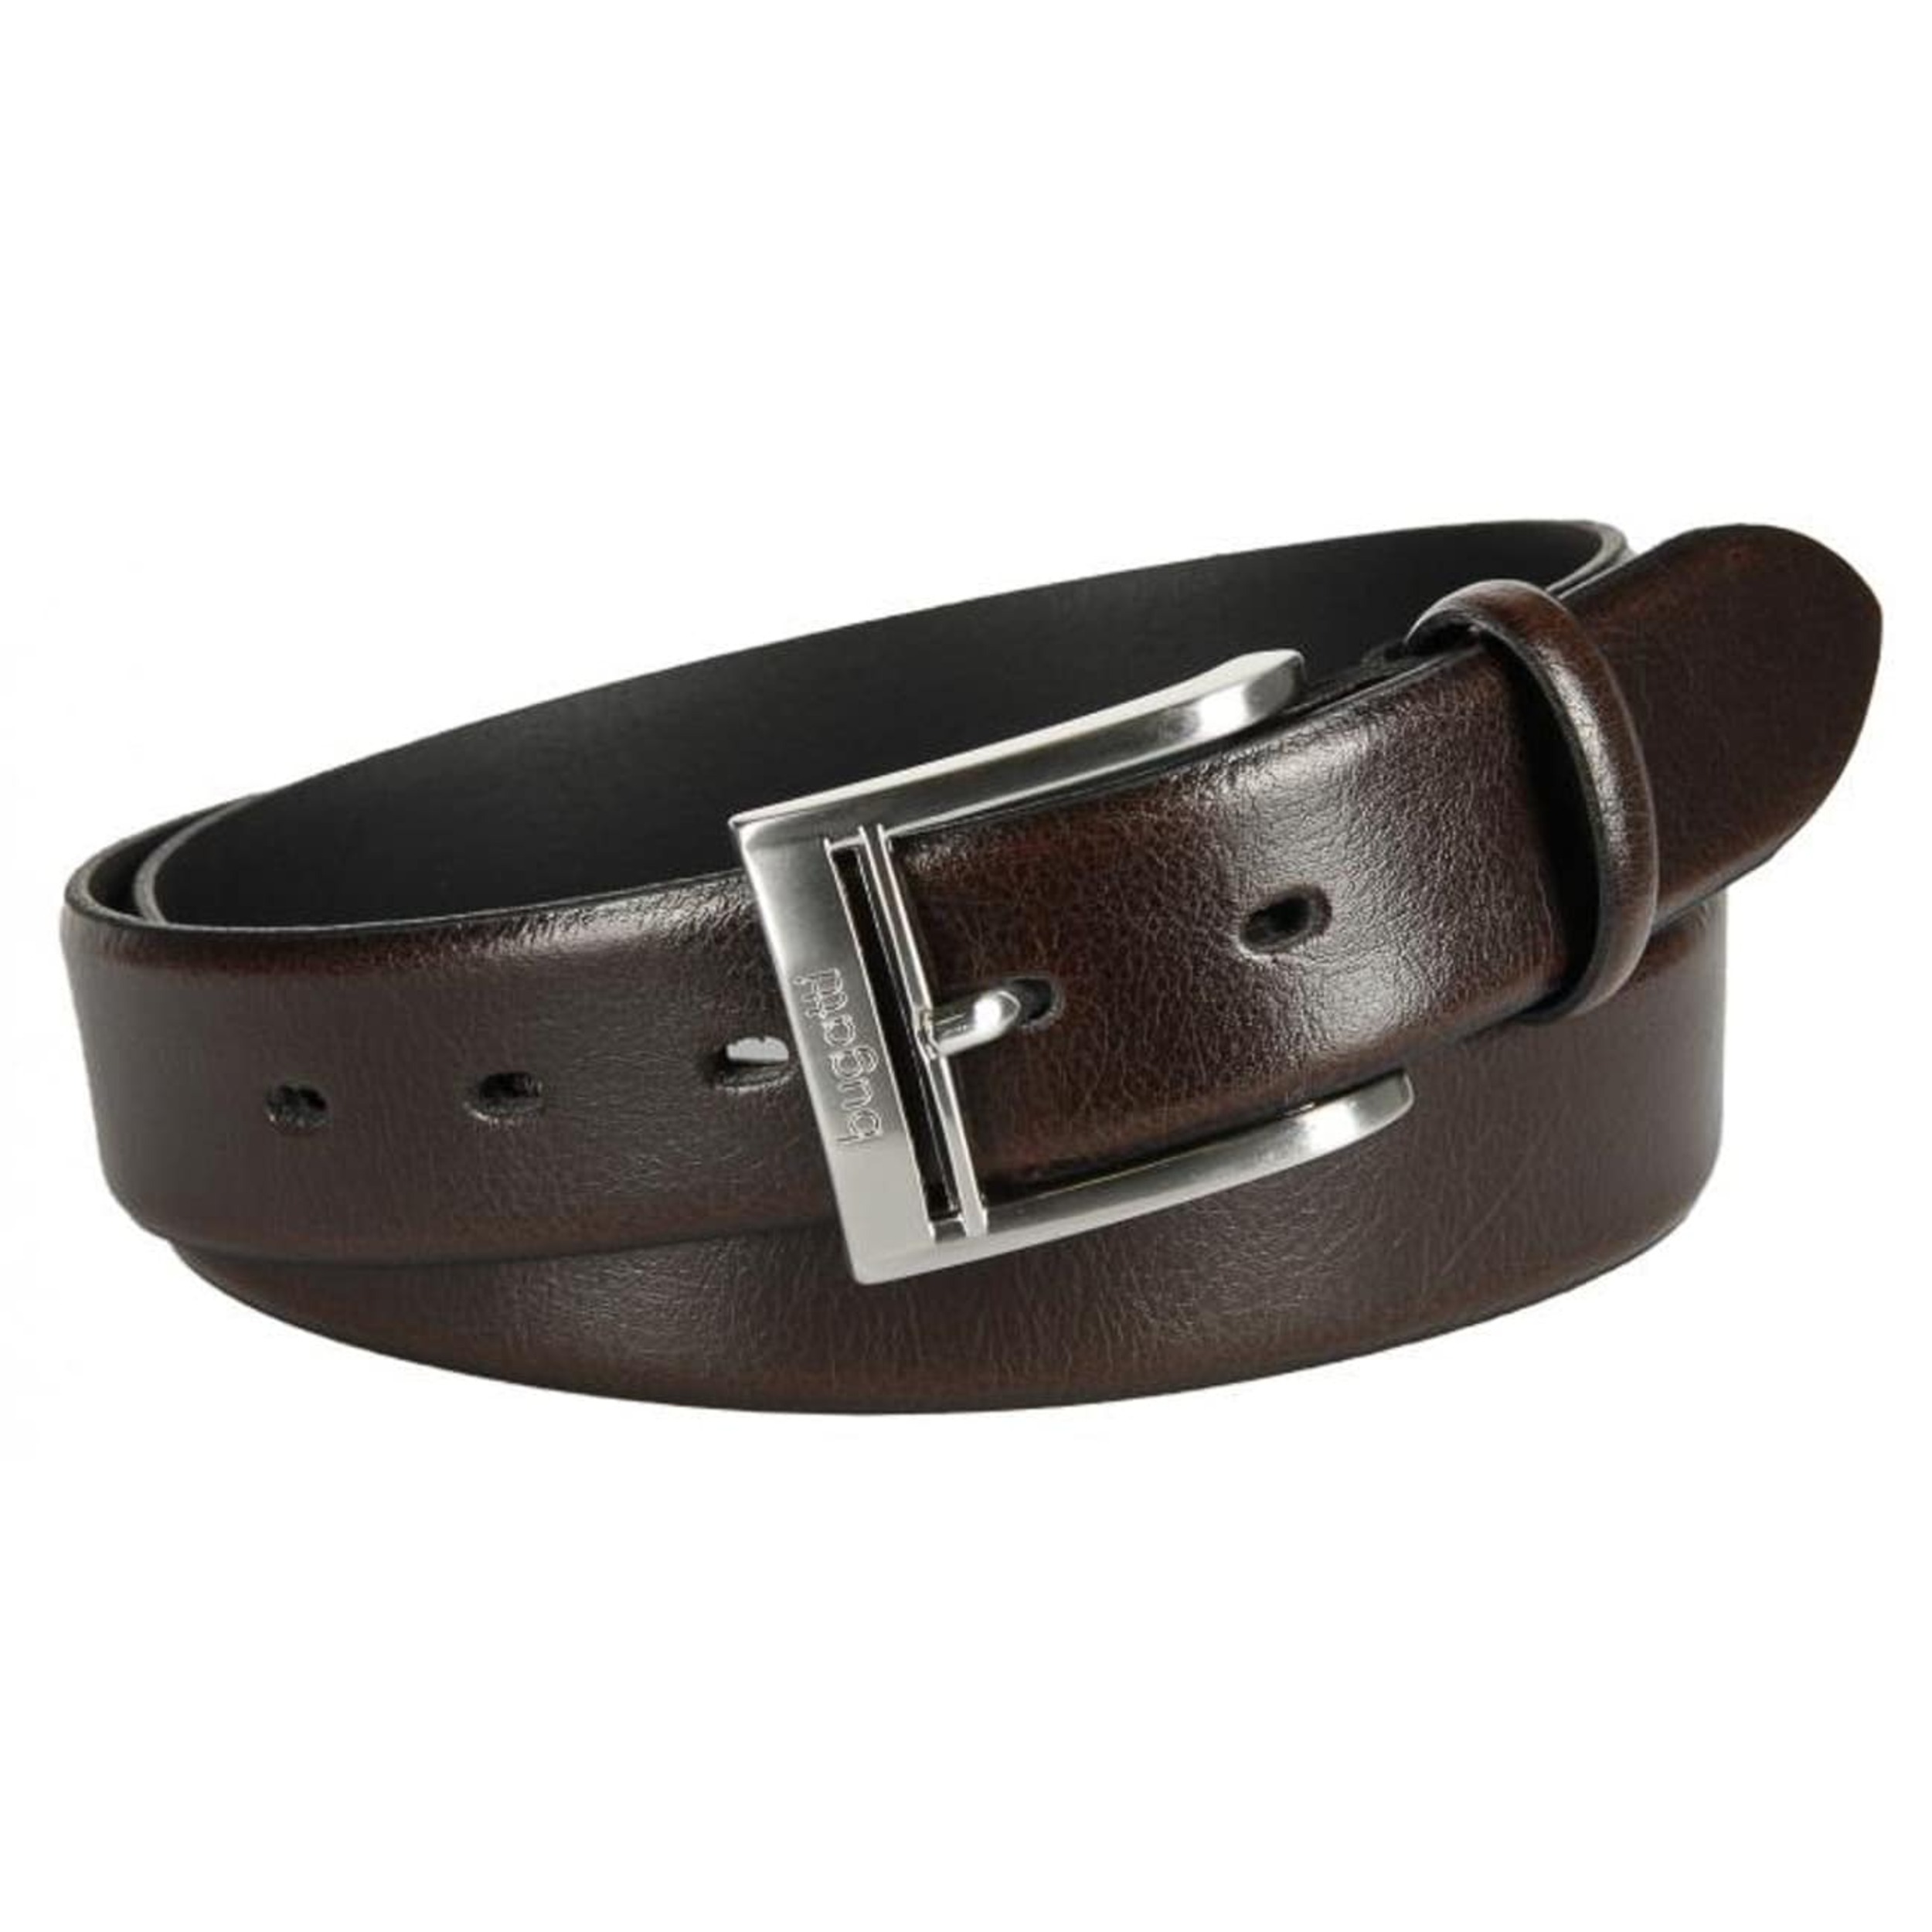 Leather Belt Elborn by bugatti - 42,95